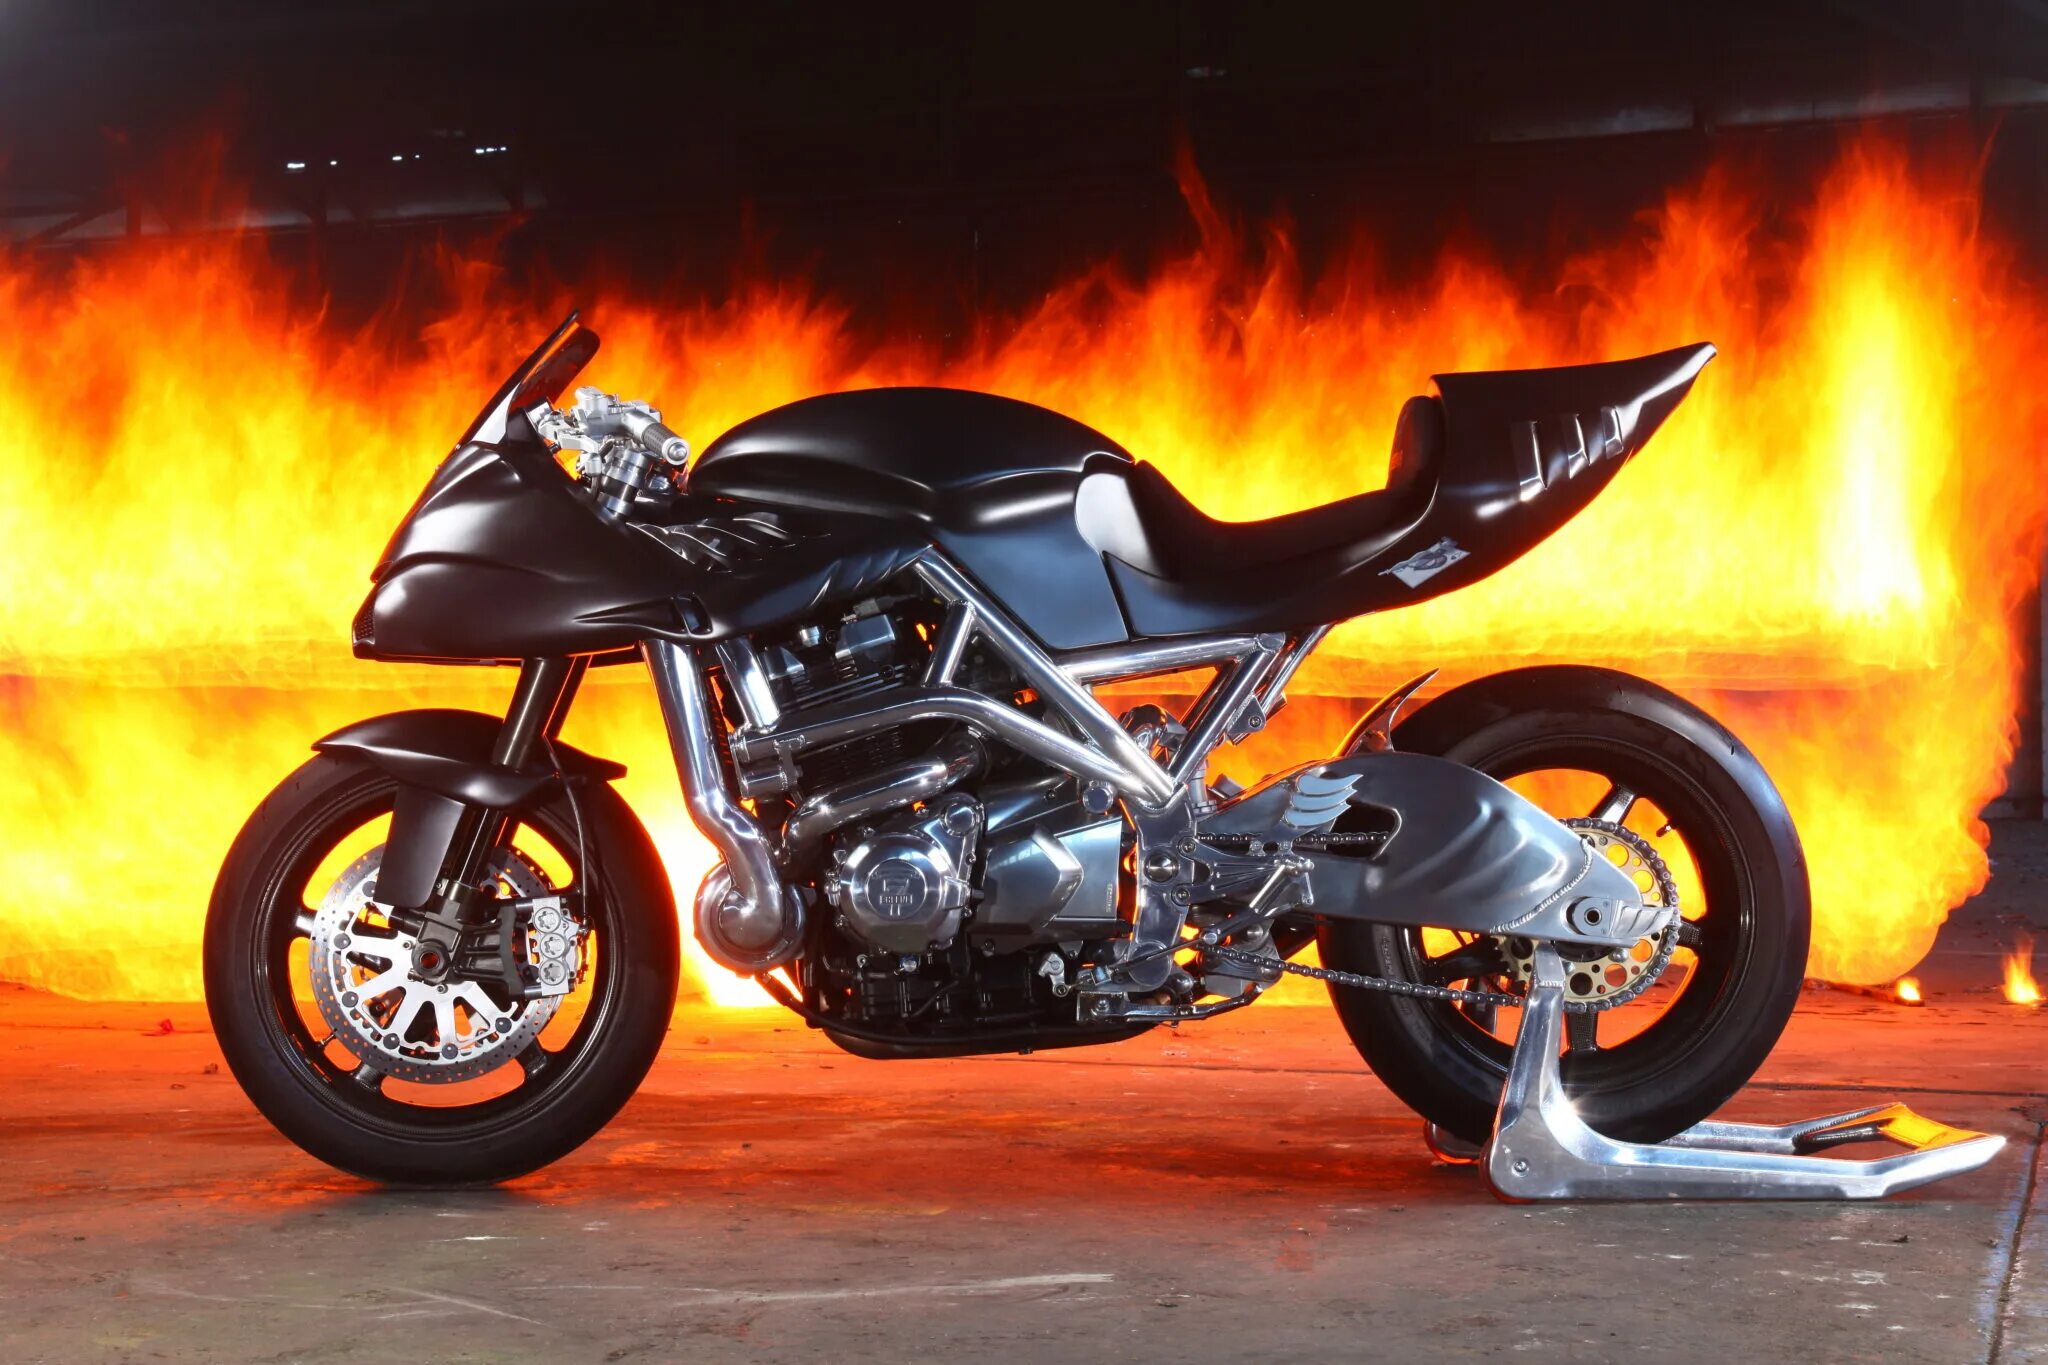 Быстрые мопеды. Мотоцикл icon Sheene. Самый дорогой мотоцикл. Самые крутые мотоциклы в мире. Быстрый мотоцикл.